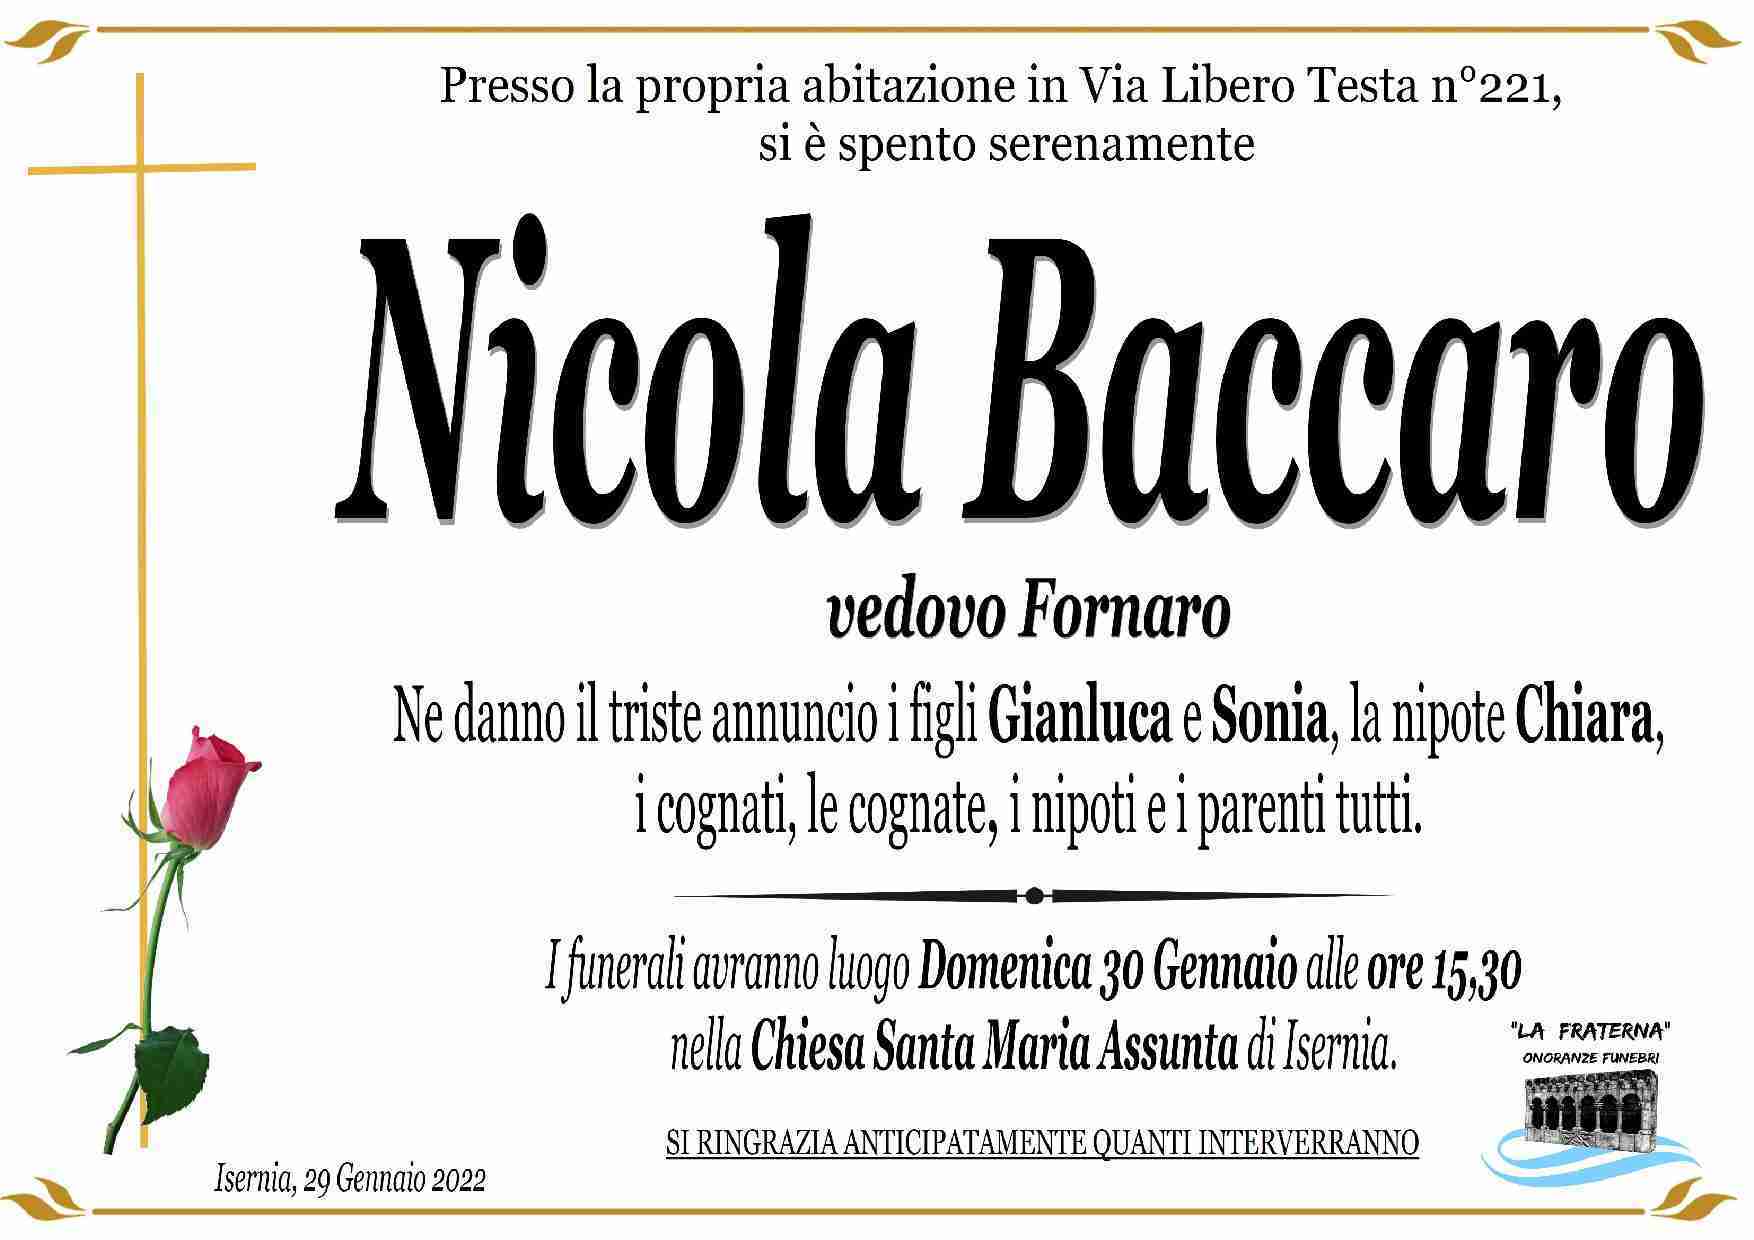 Nicolangelo Baccaro